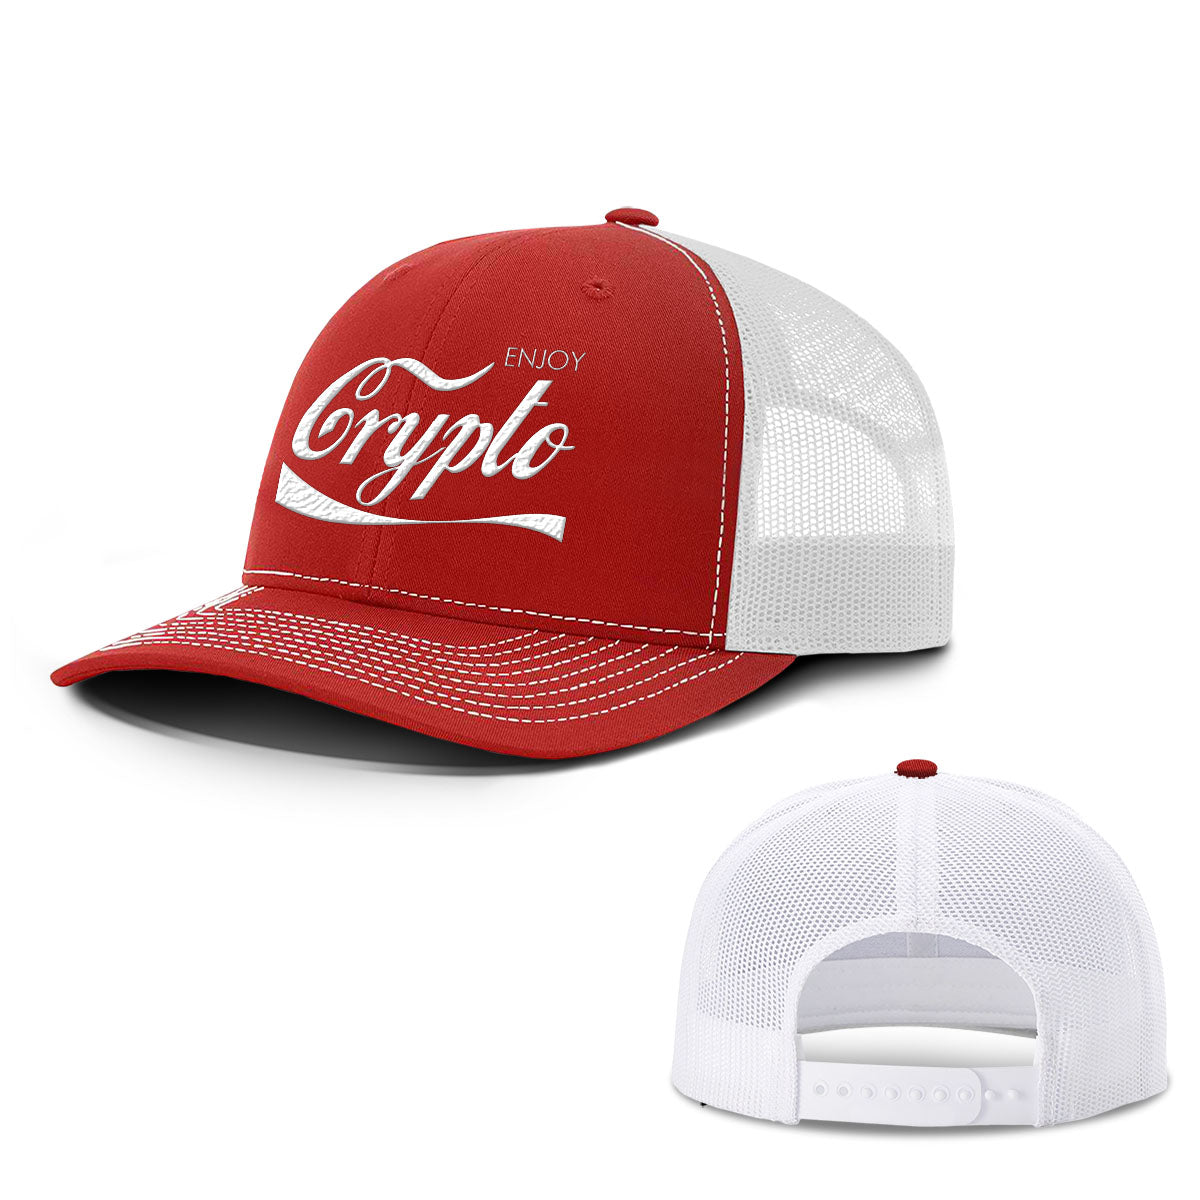 Enjoy Crypto Hats - BustedTees.com